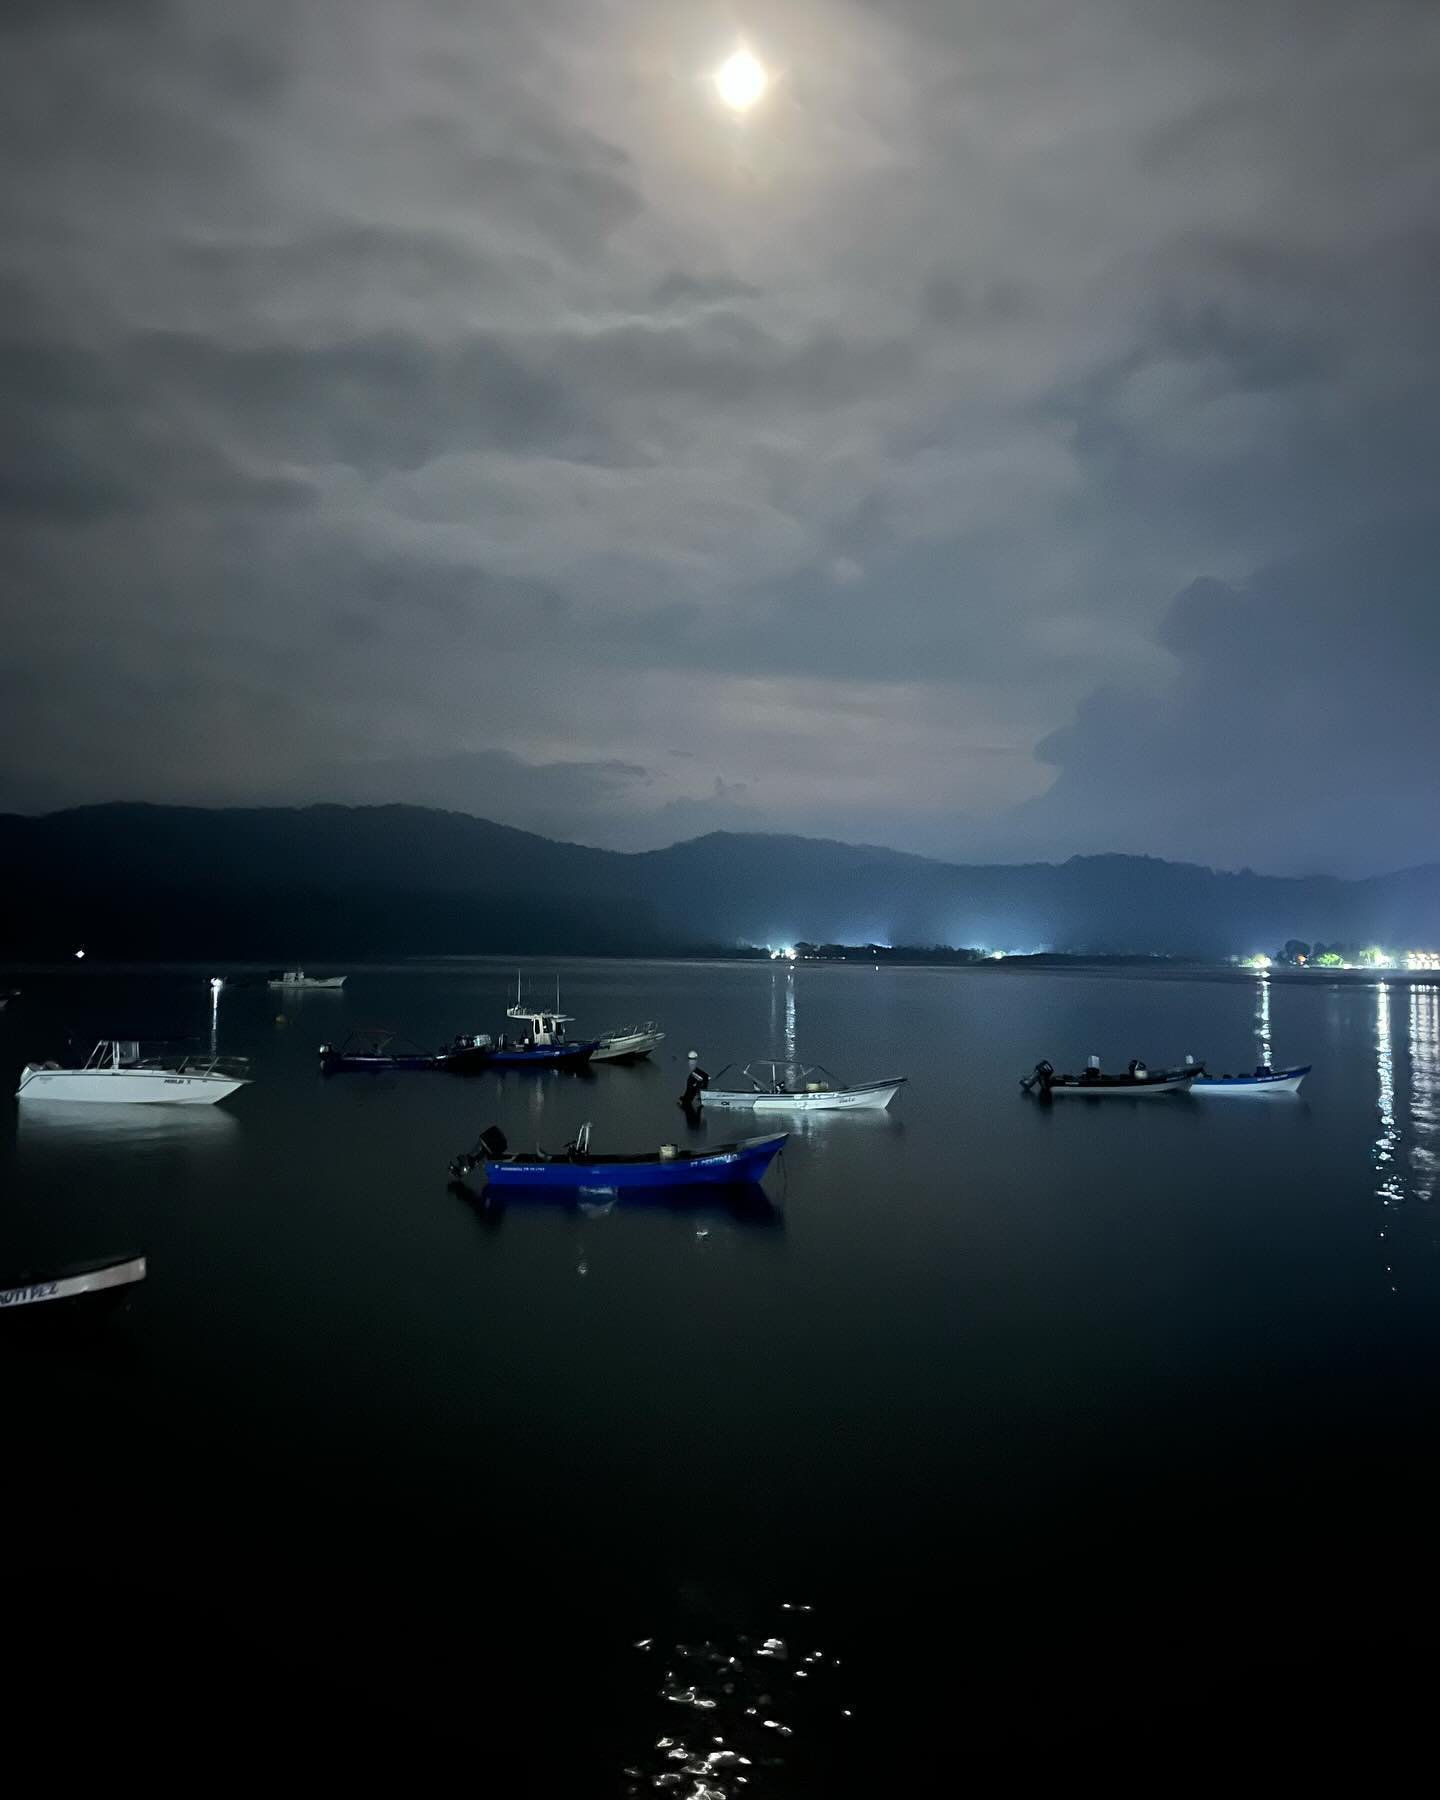 Puerto de Bah&iacute;a Solano. Luna y pesca.

#colombia🇨🇴 #travel #adventure #dock #bahiasolano #fisherman #fishing #moon #moonlight #natgeoyourshot #natgeotravel #night #peaceful